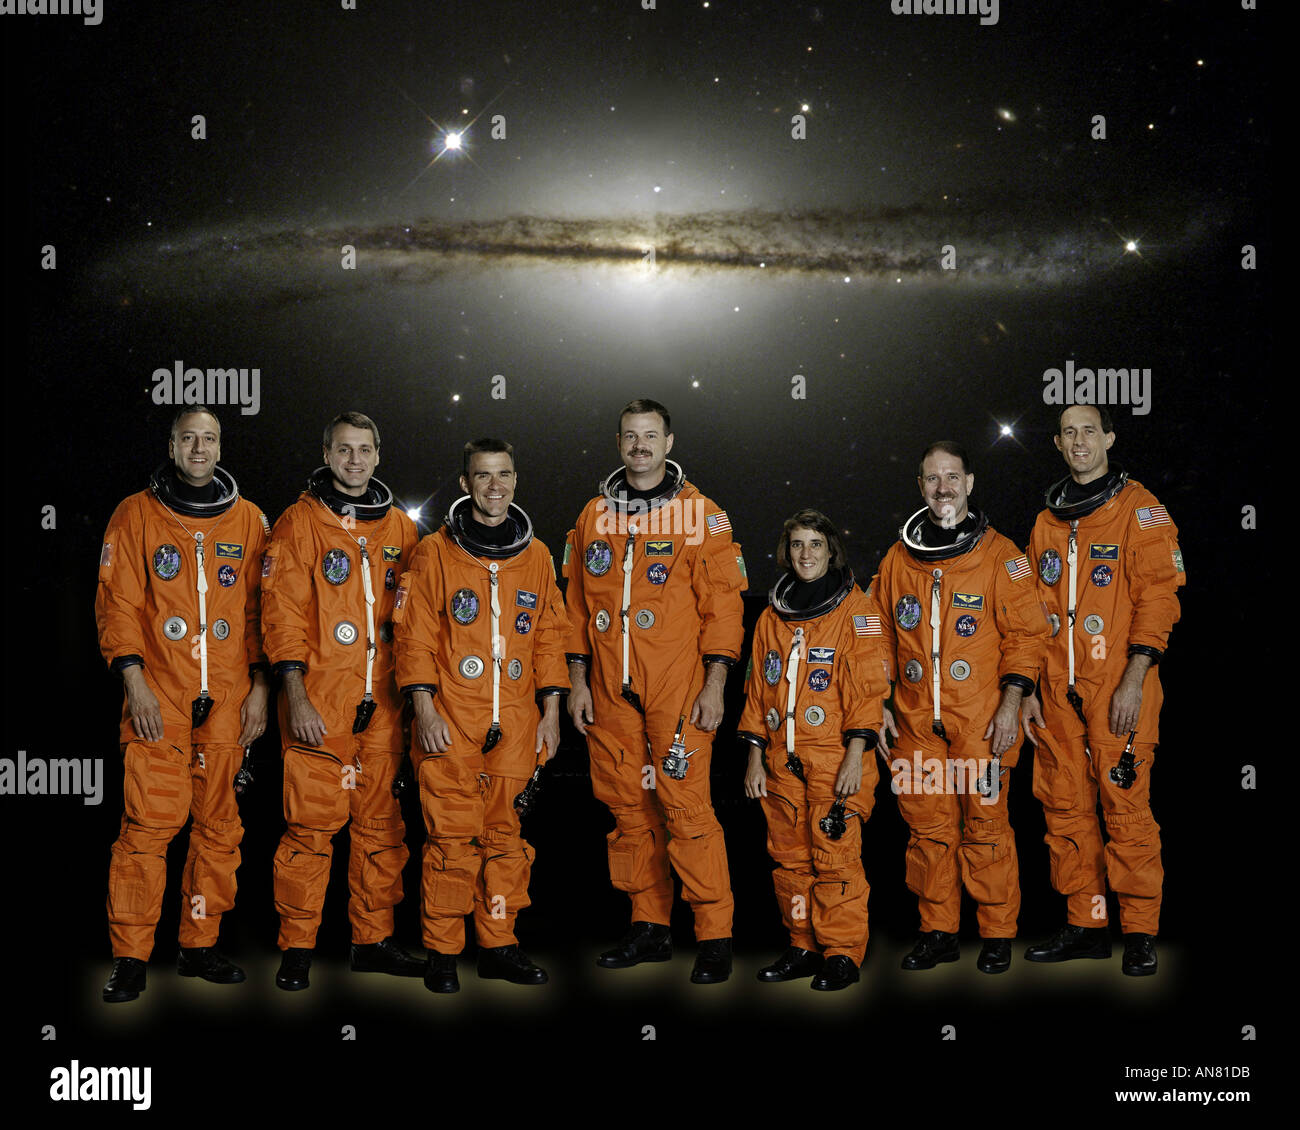 Seven astronauts  STS 109 mission pose traditional pre-flight crew portrait Stock Photo